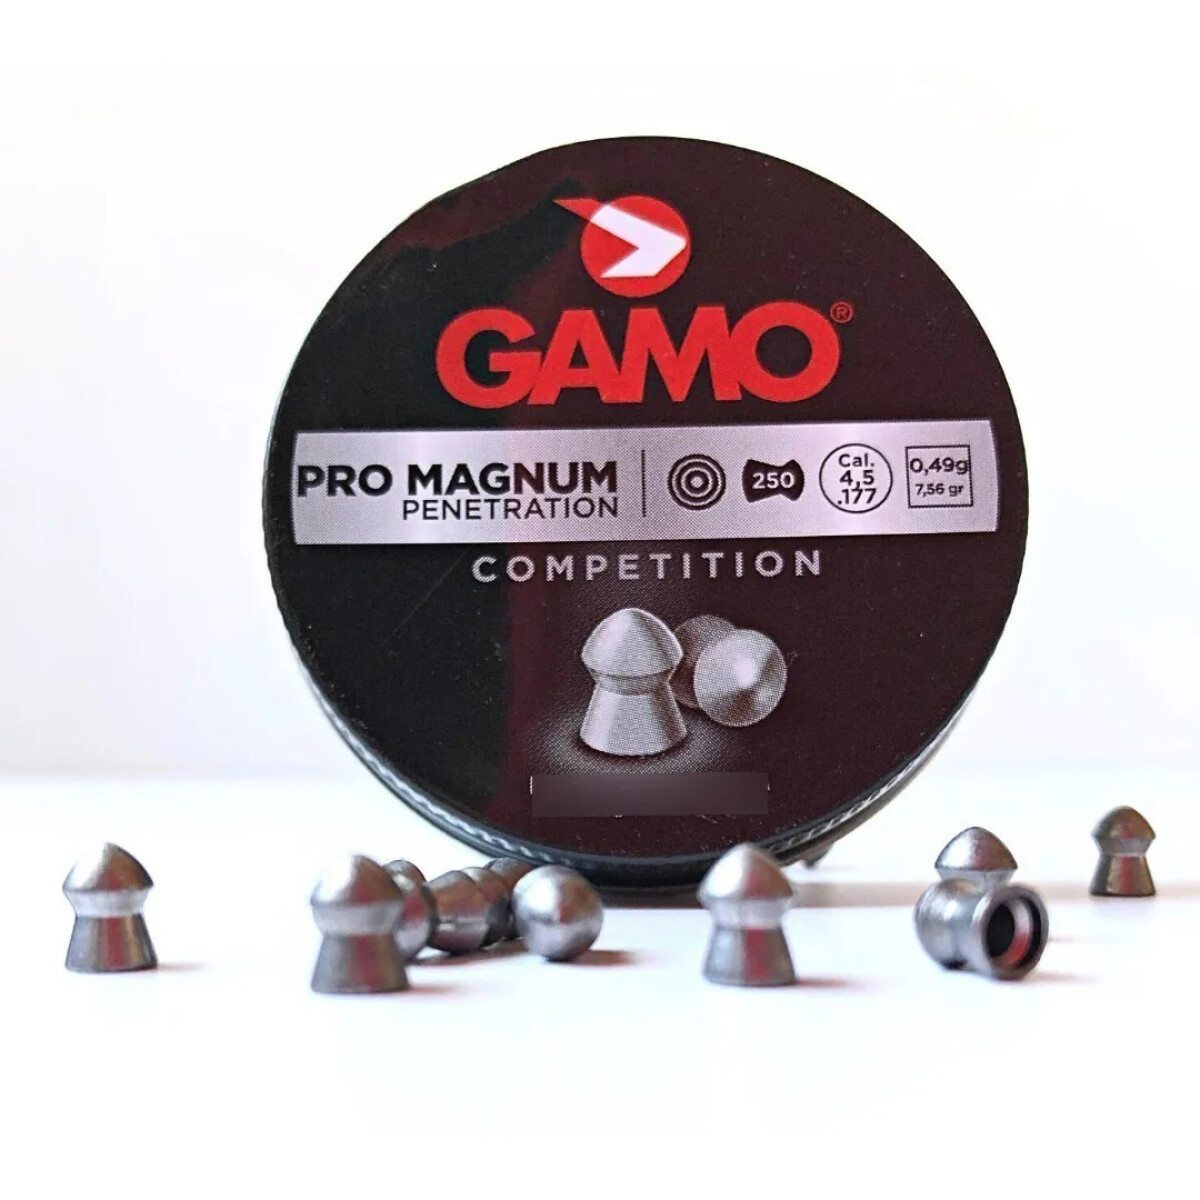 Chumbo gamo pro magnum cal 4.5 x 250 c/metal 